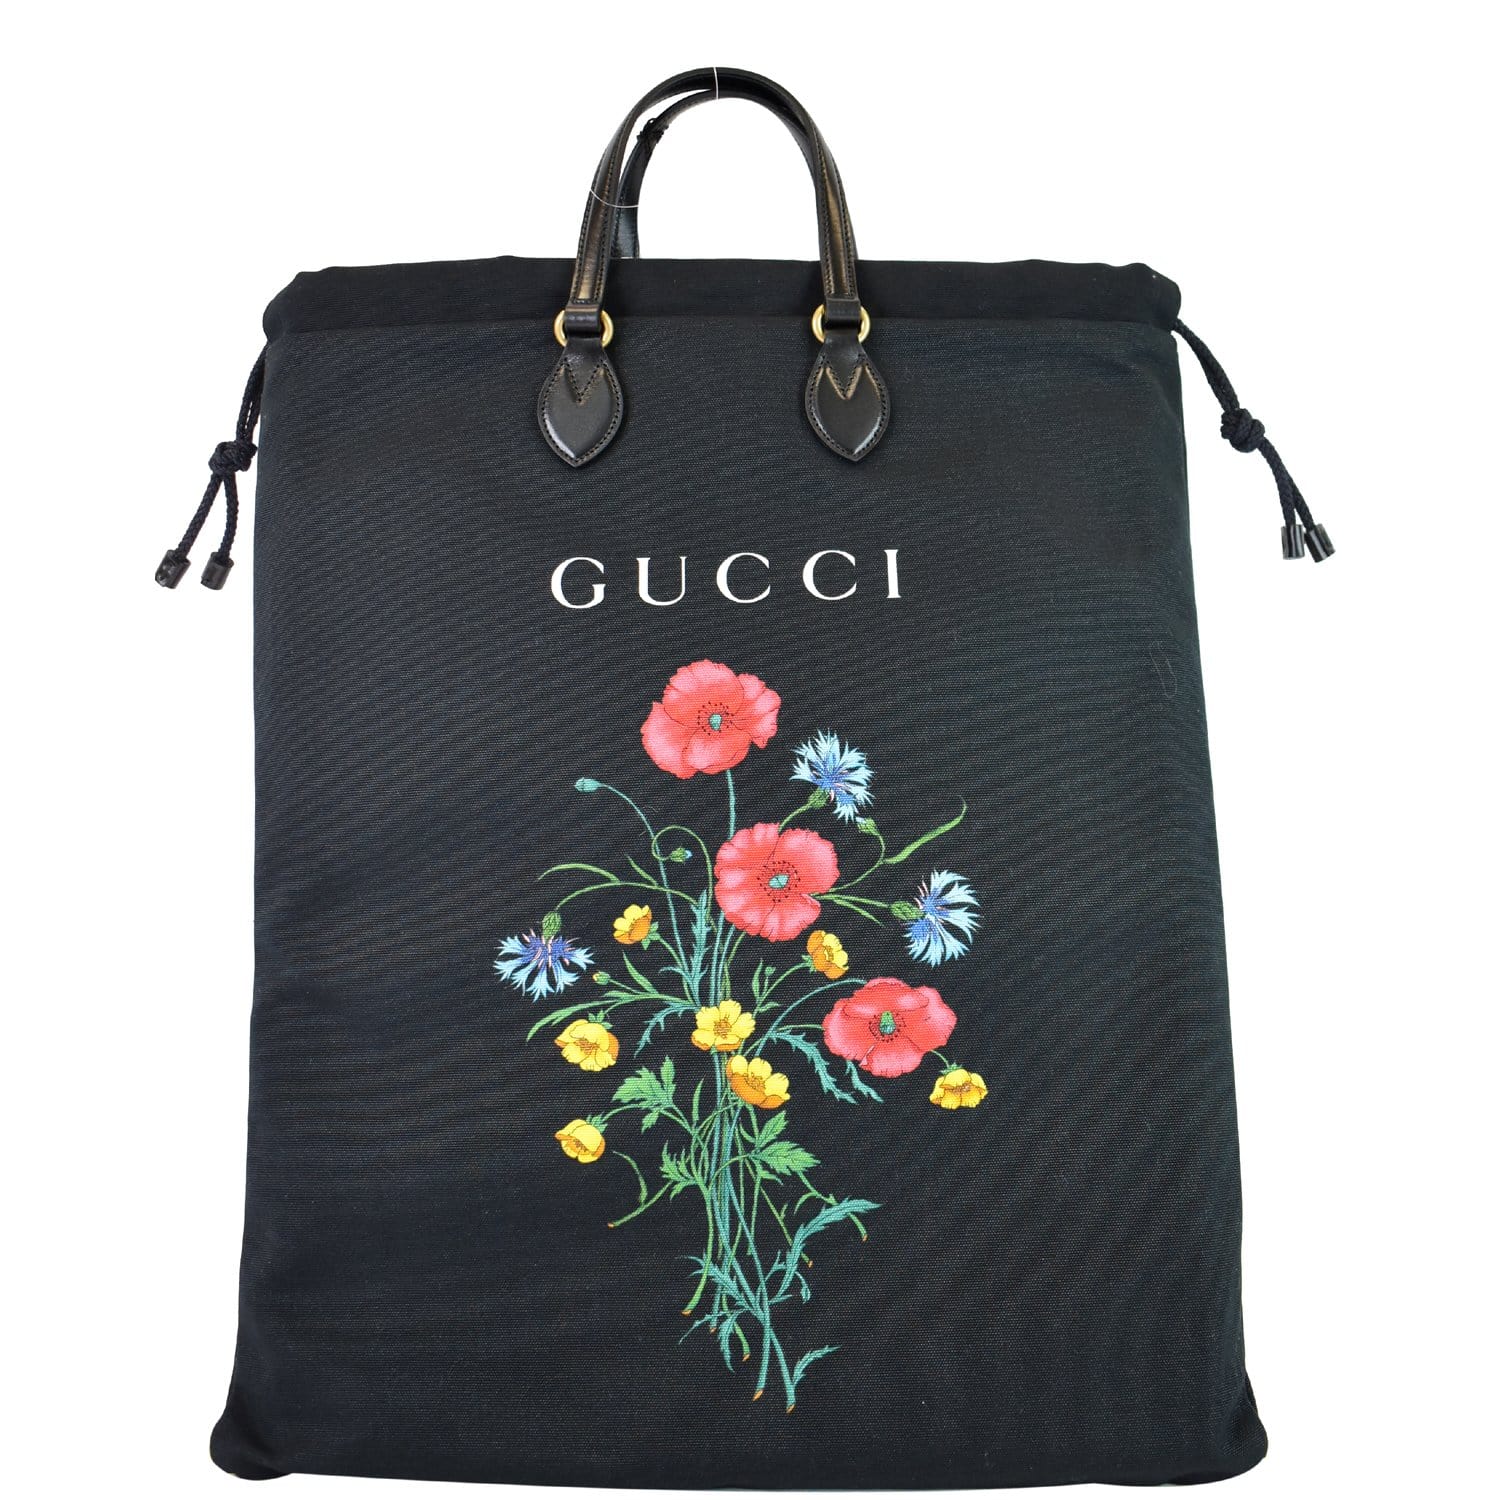 Gucci Marmont Chateau Canvas Drawstring Tote Bag Black